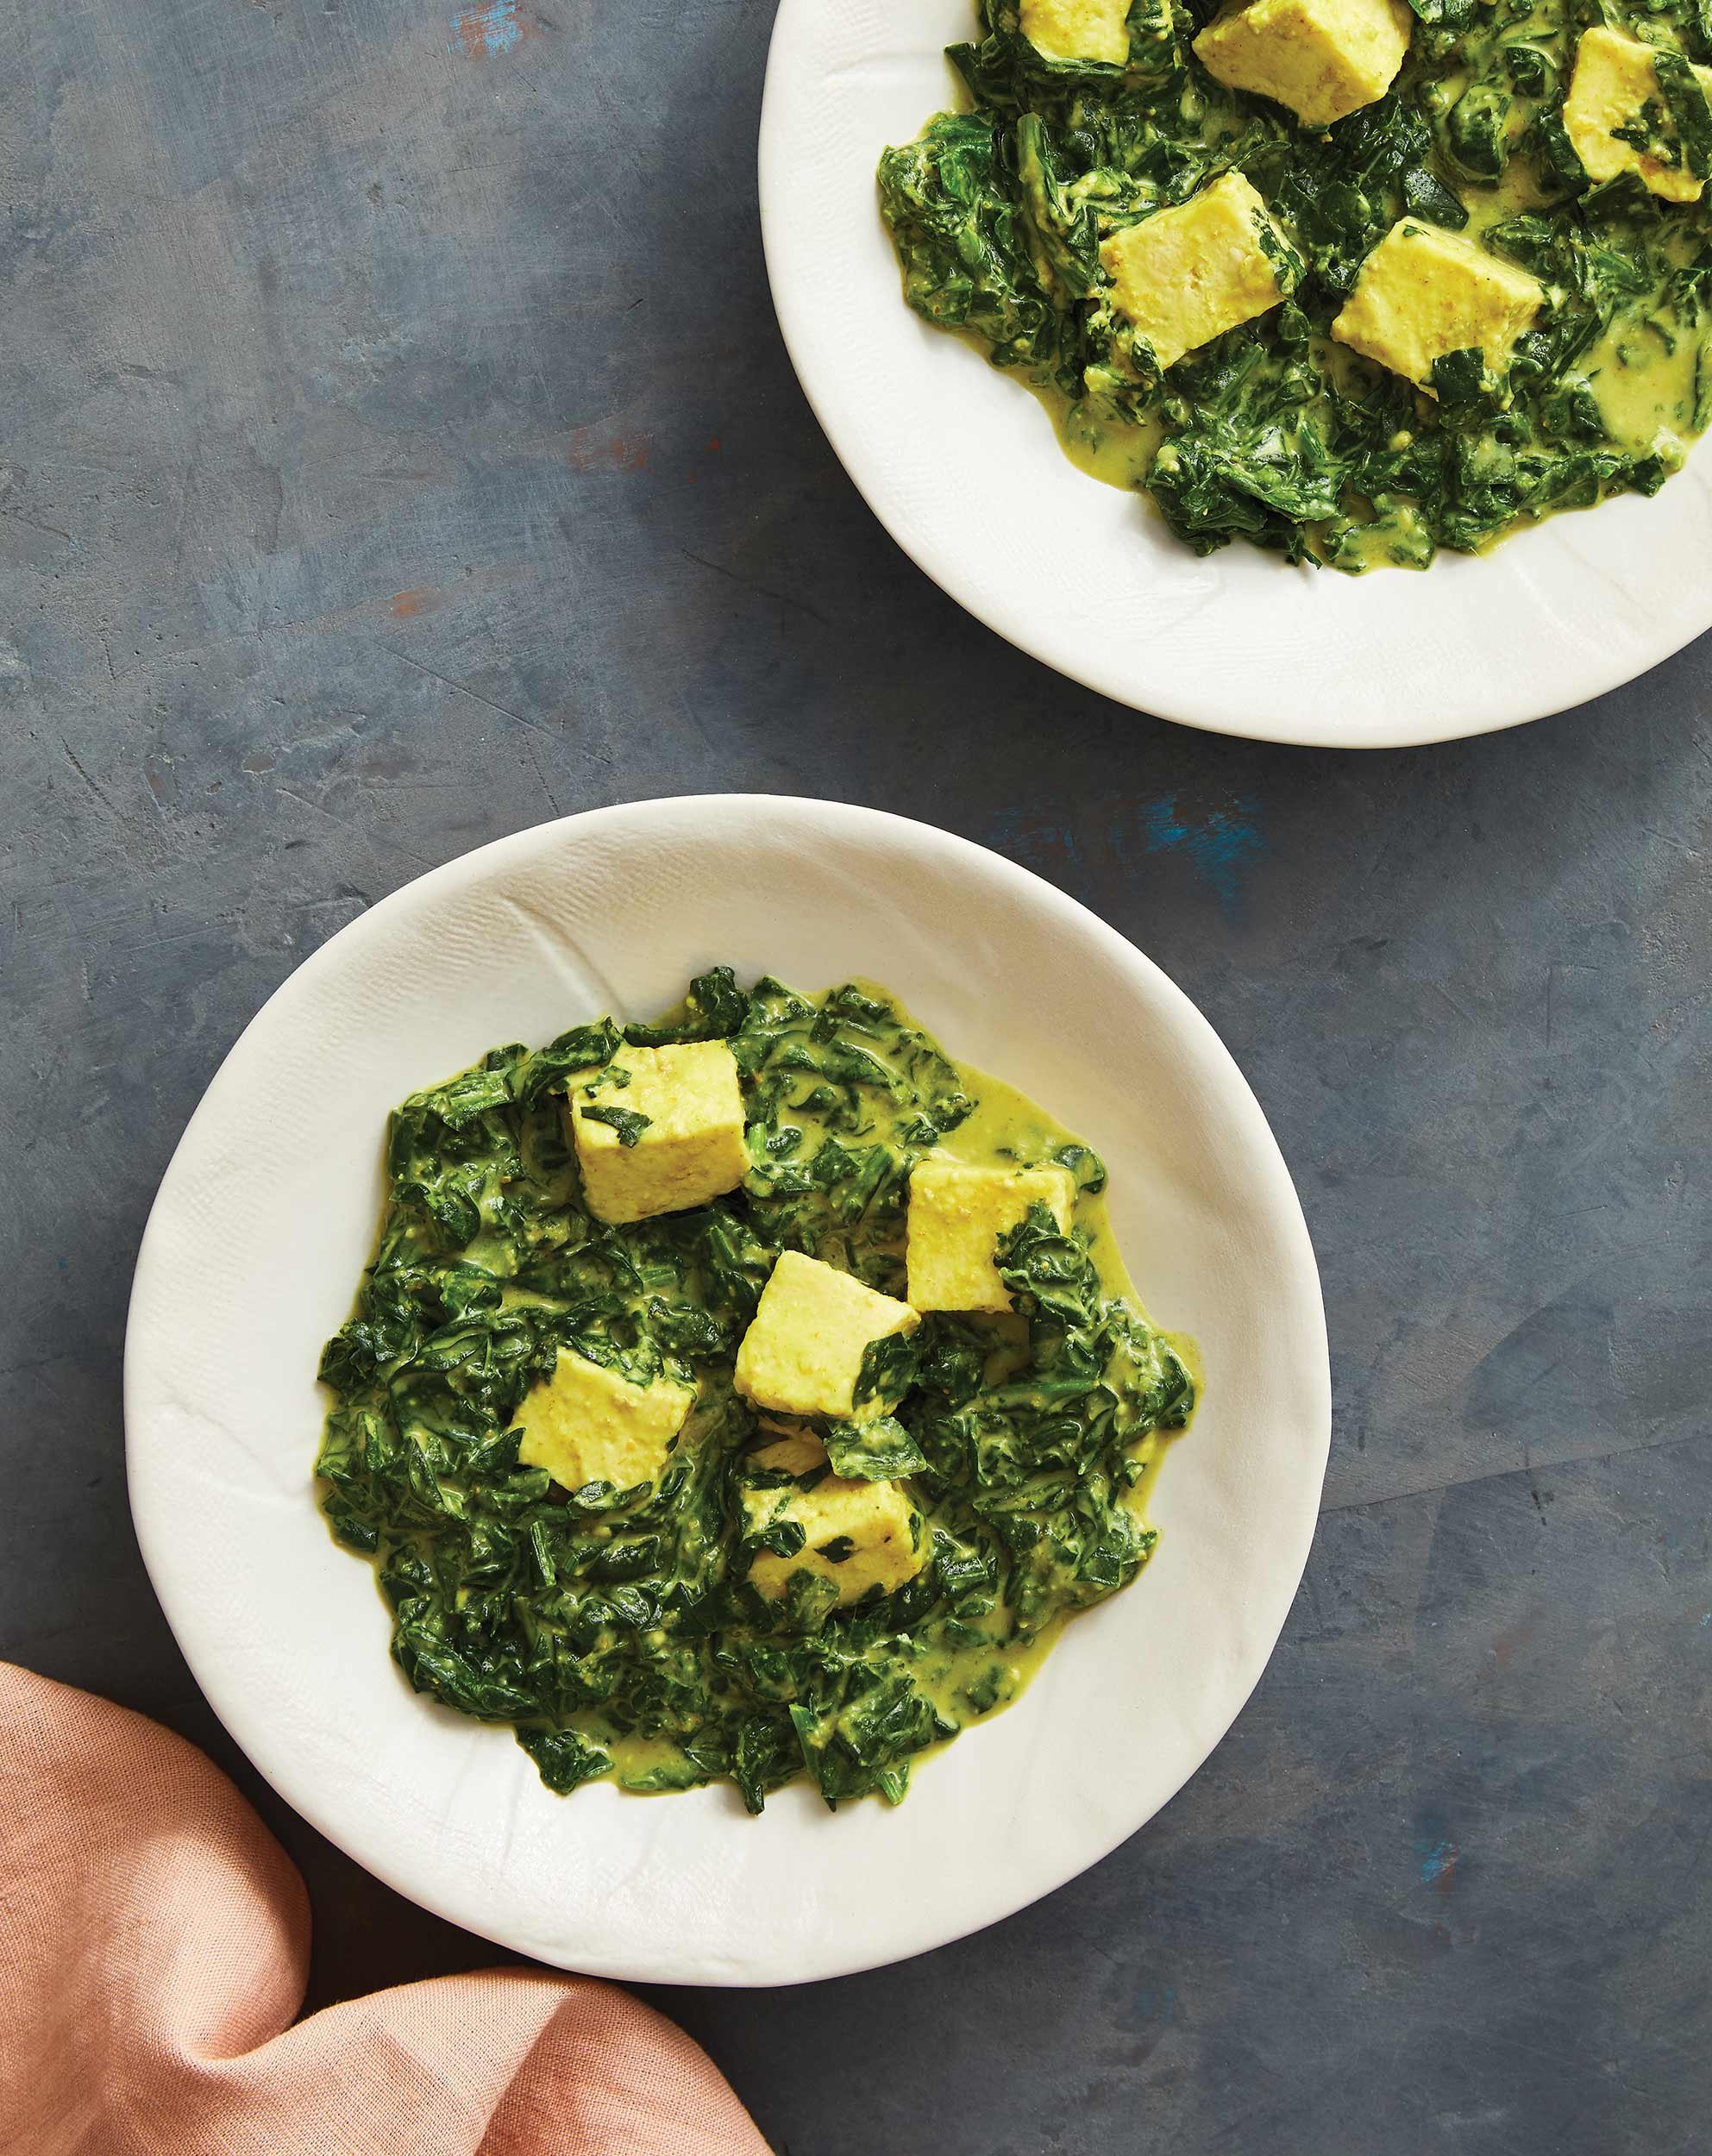 nyc-nj-cookbook-photographer-food-joy-of-balance-divya-alter-spinach-cheese.jpg